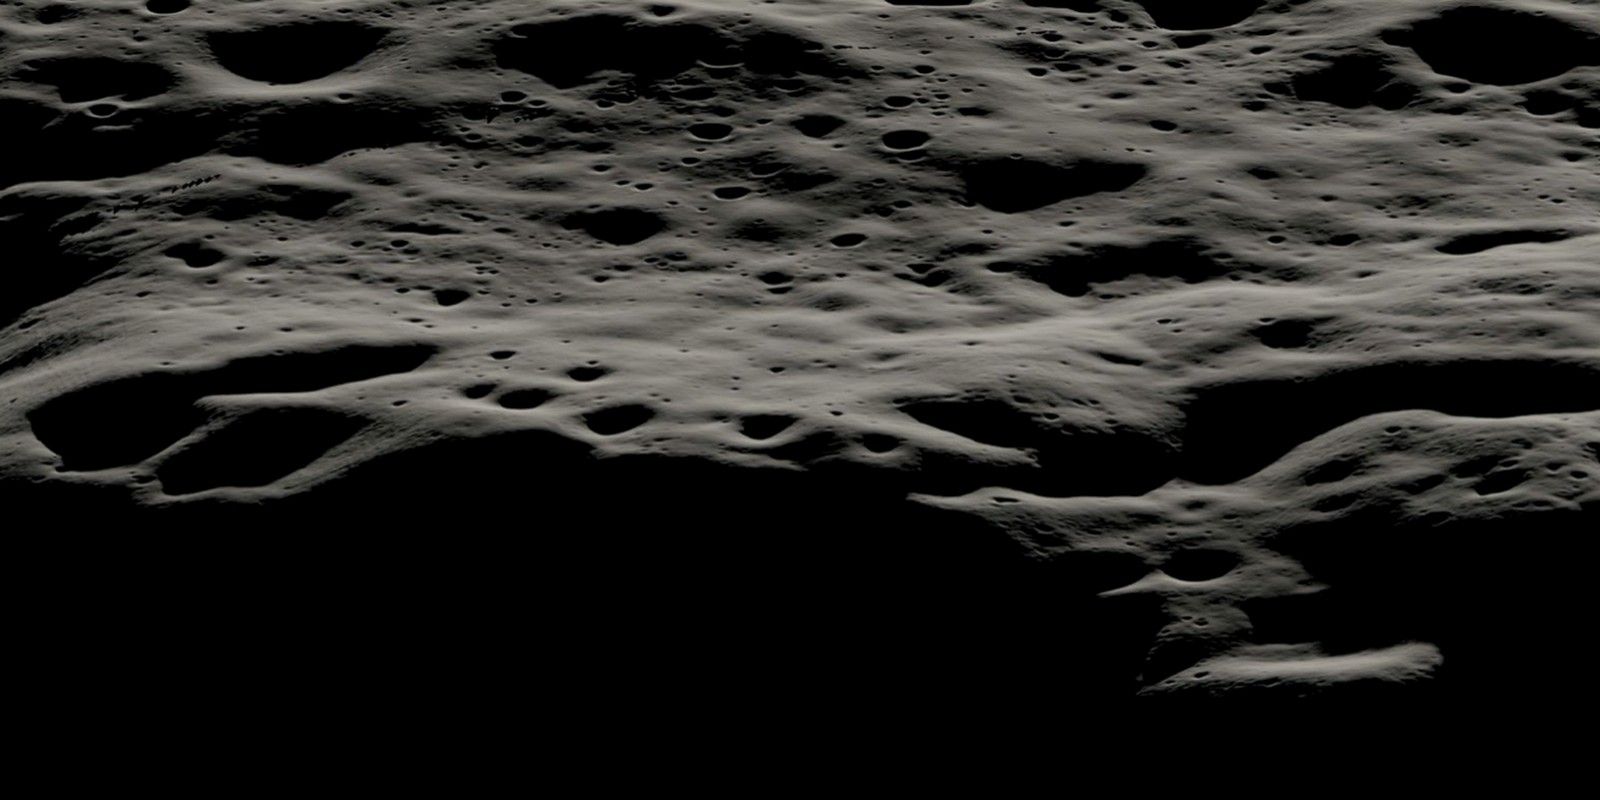 NASA South Pole of Moon Viper Rover